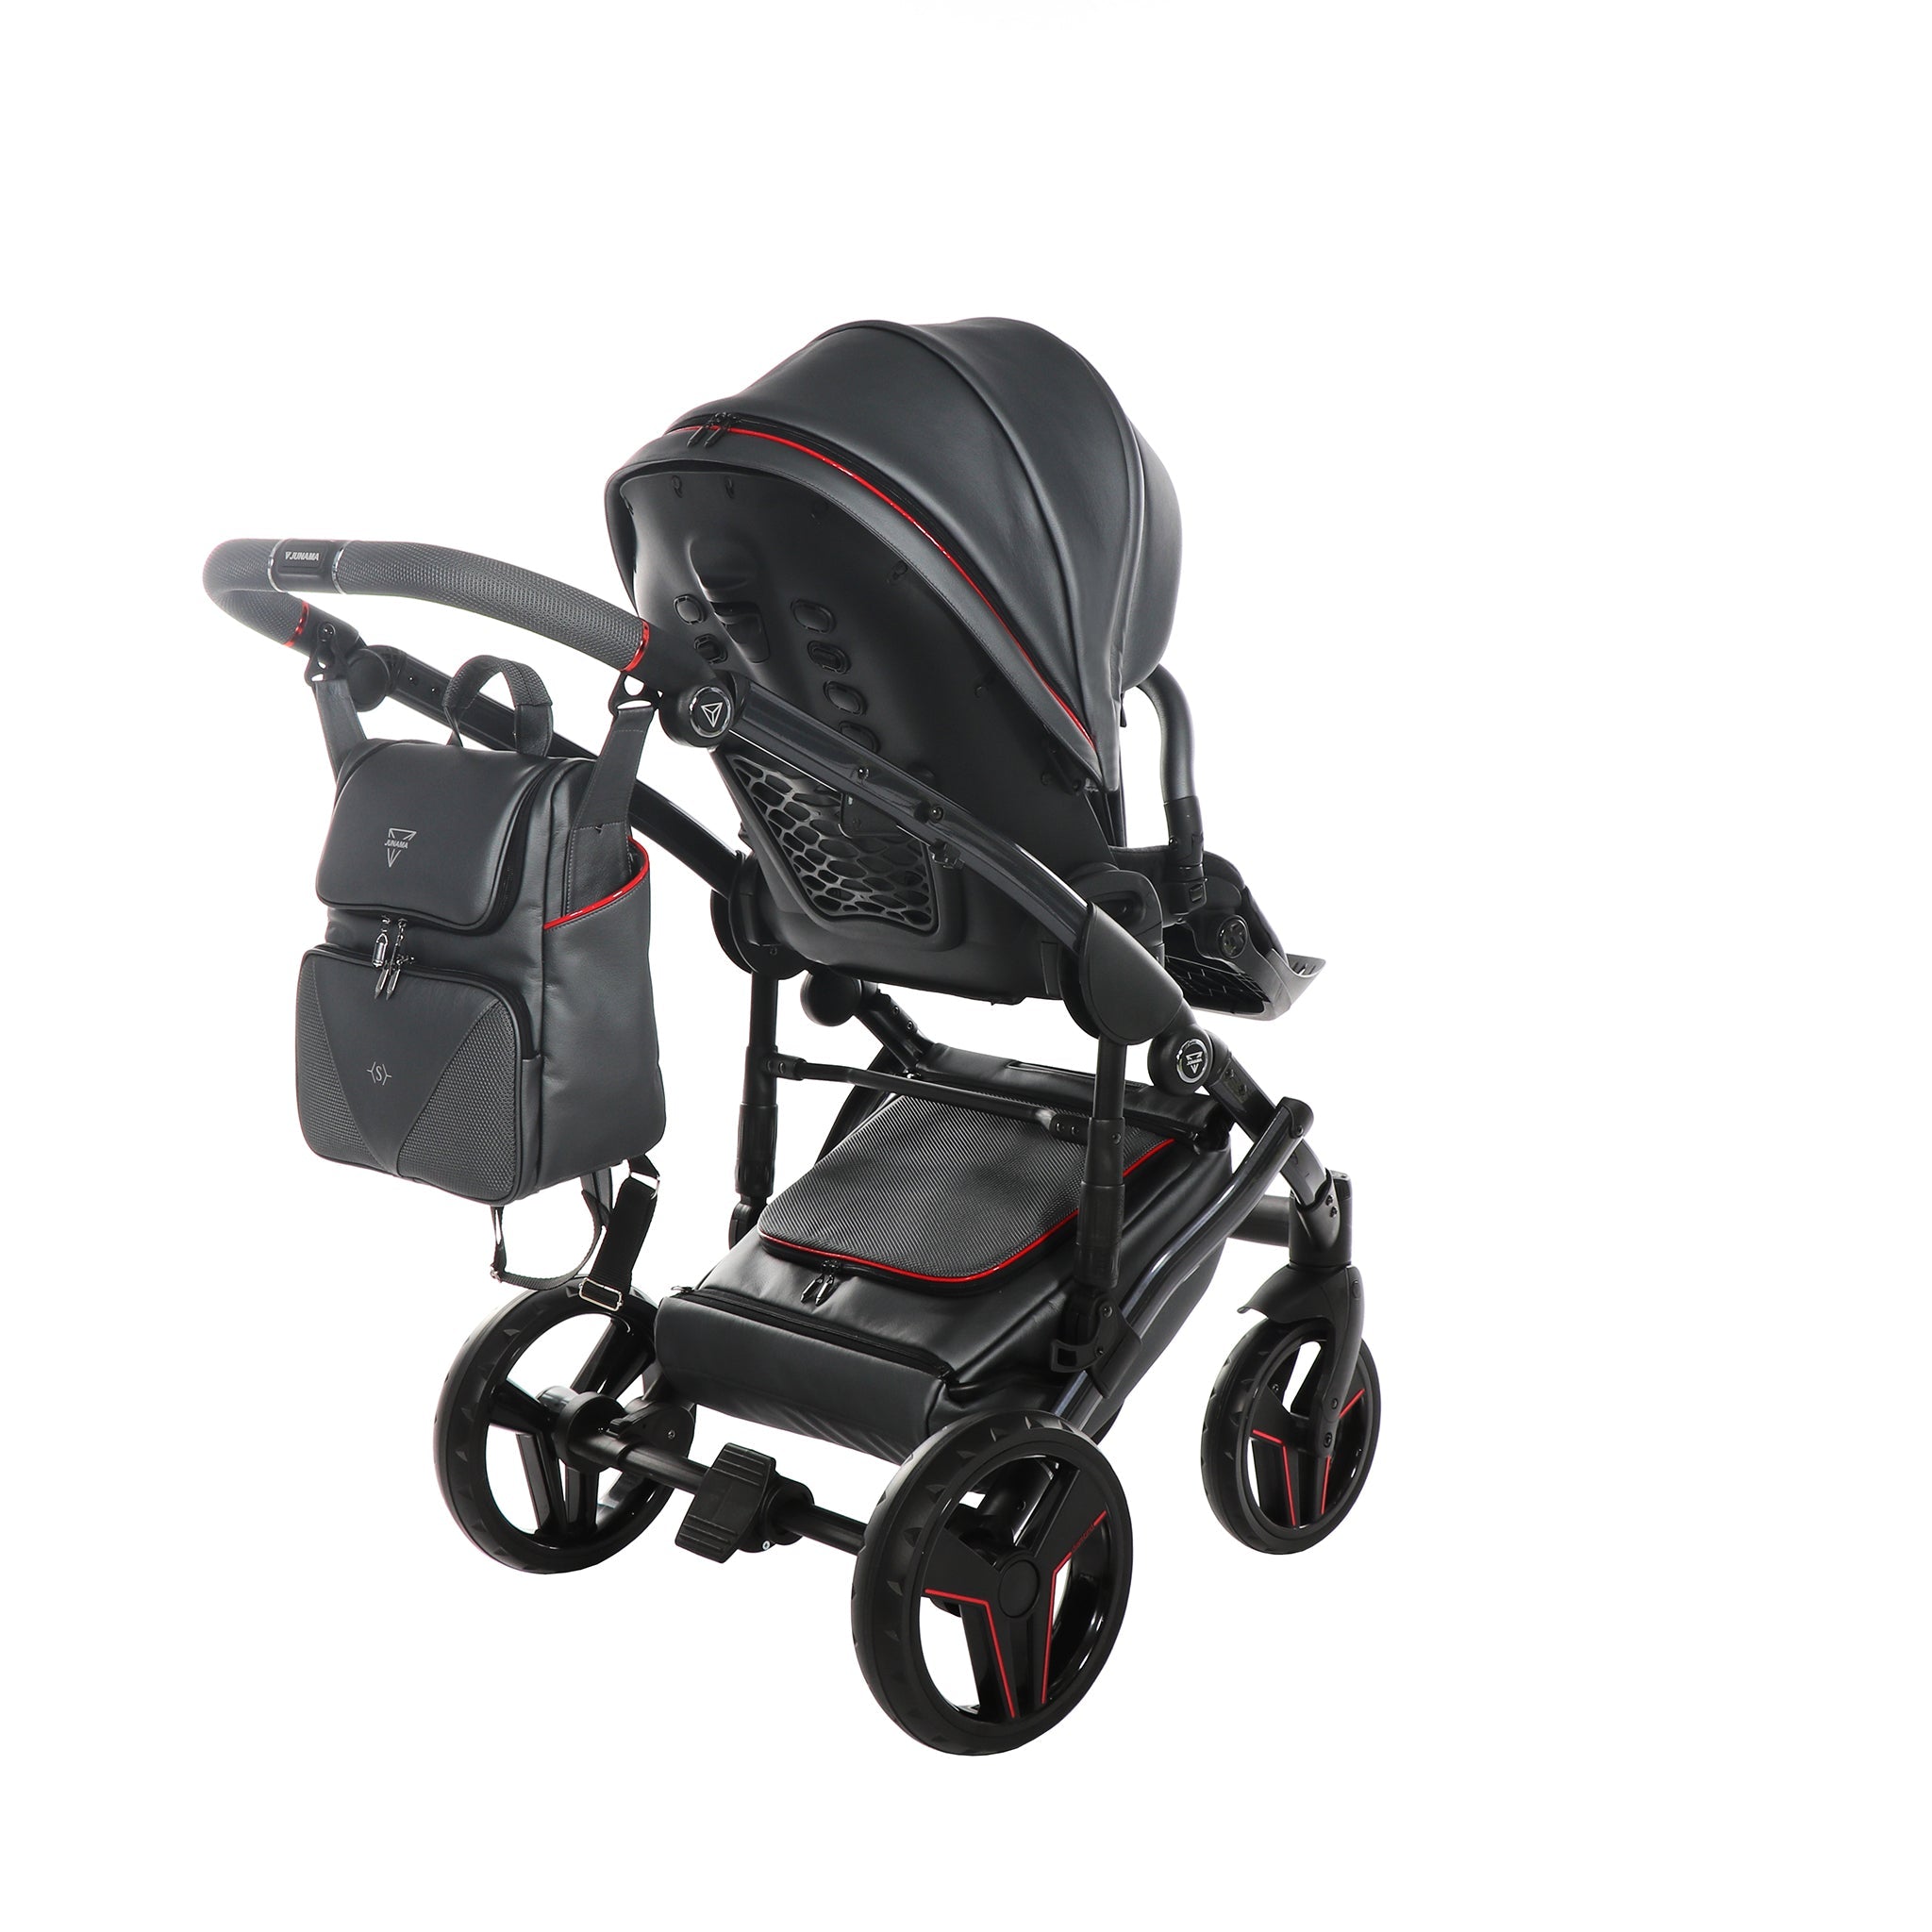 Junama S Class, baby prams or stroller 2 in 1 - Dark Gray and Black, Code number: JUNSC06